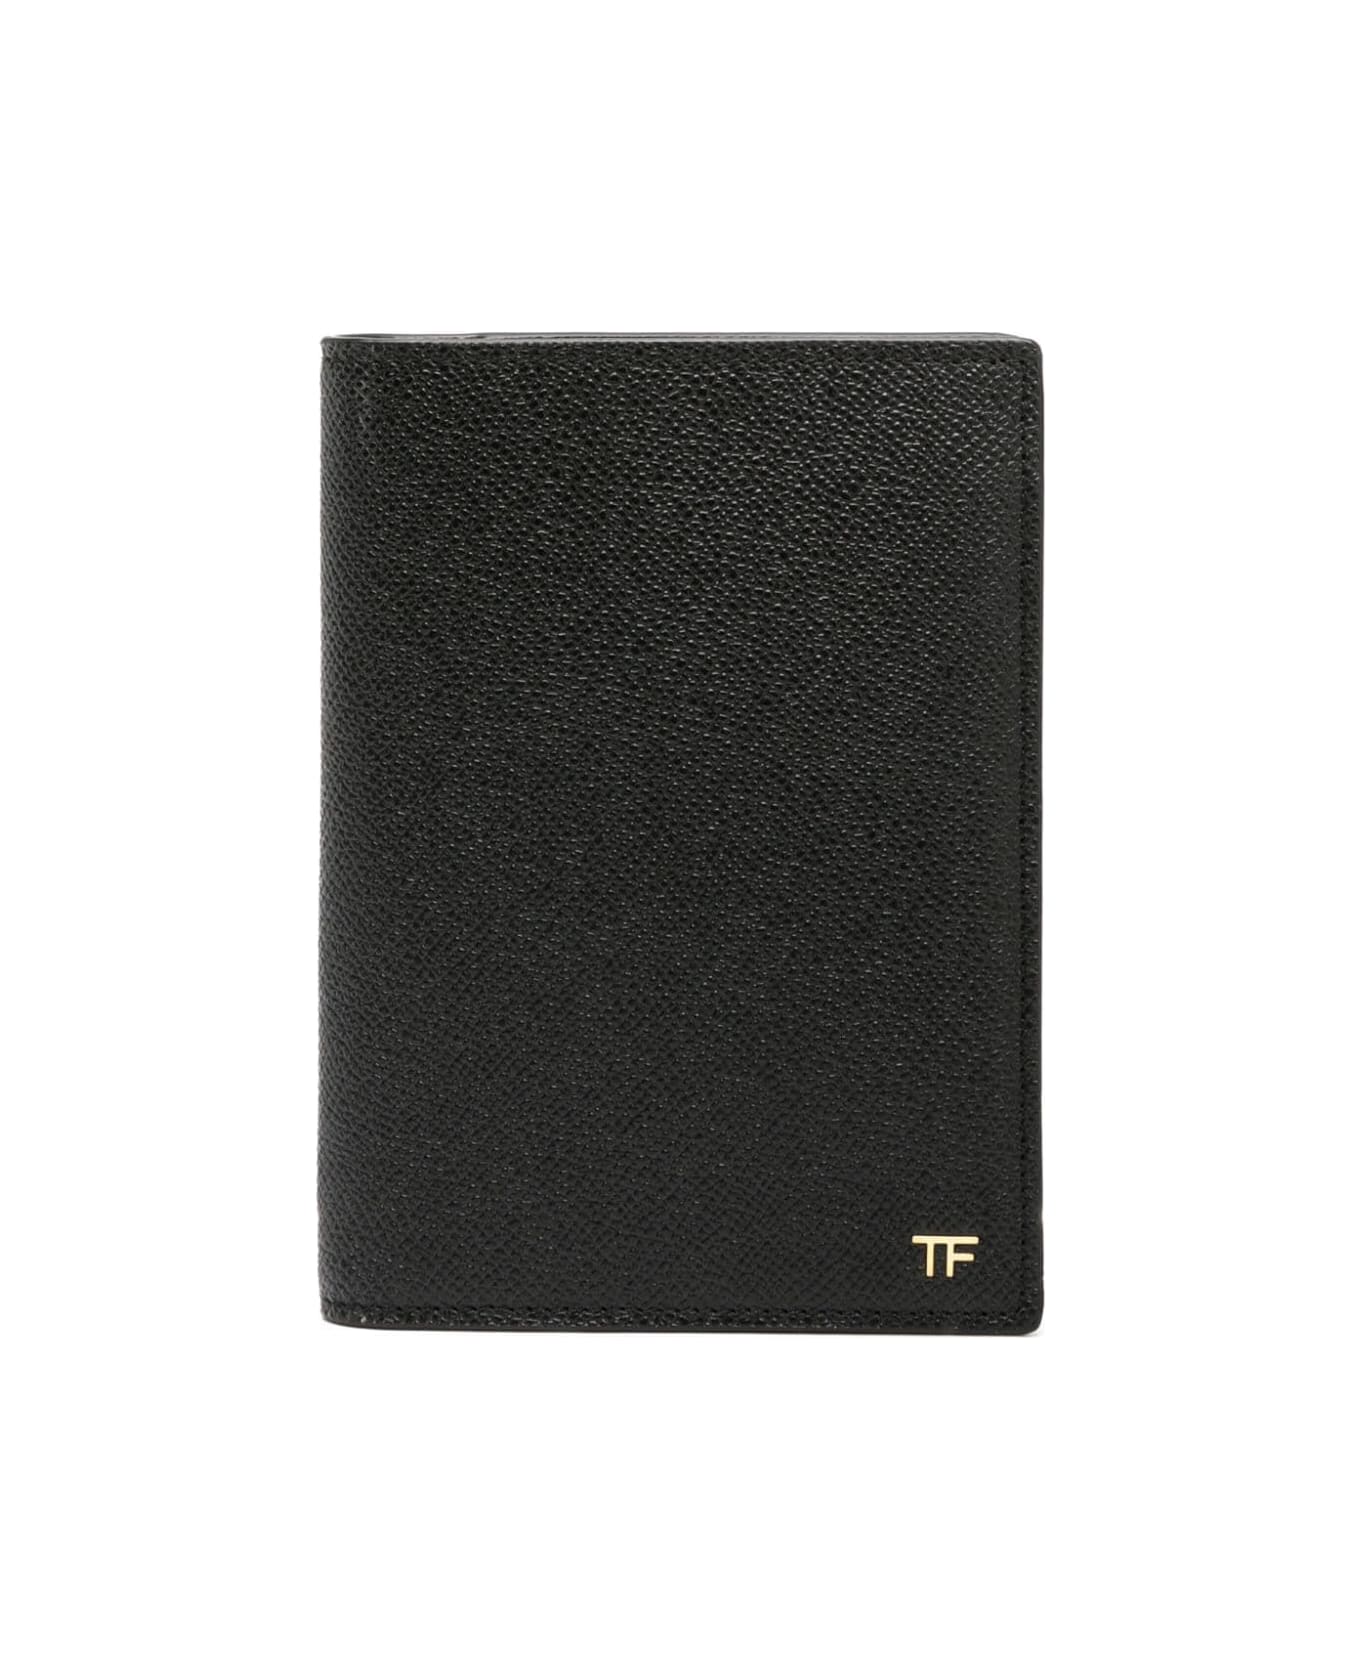 Tom Ford Stationary Wallet - Black